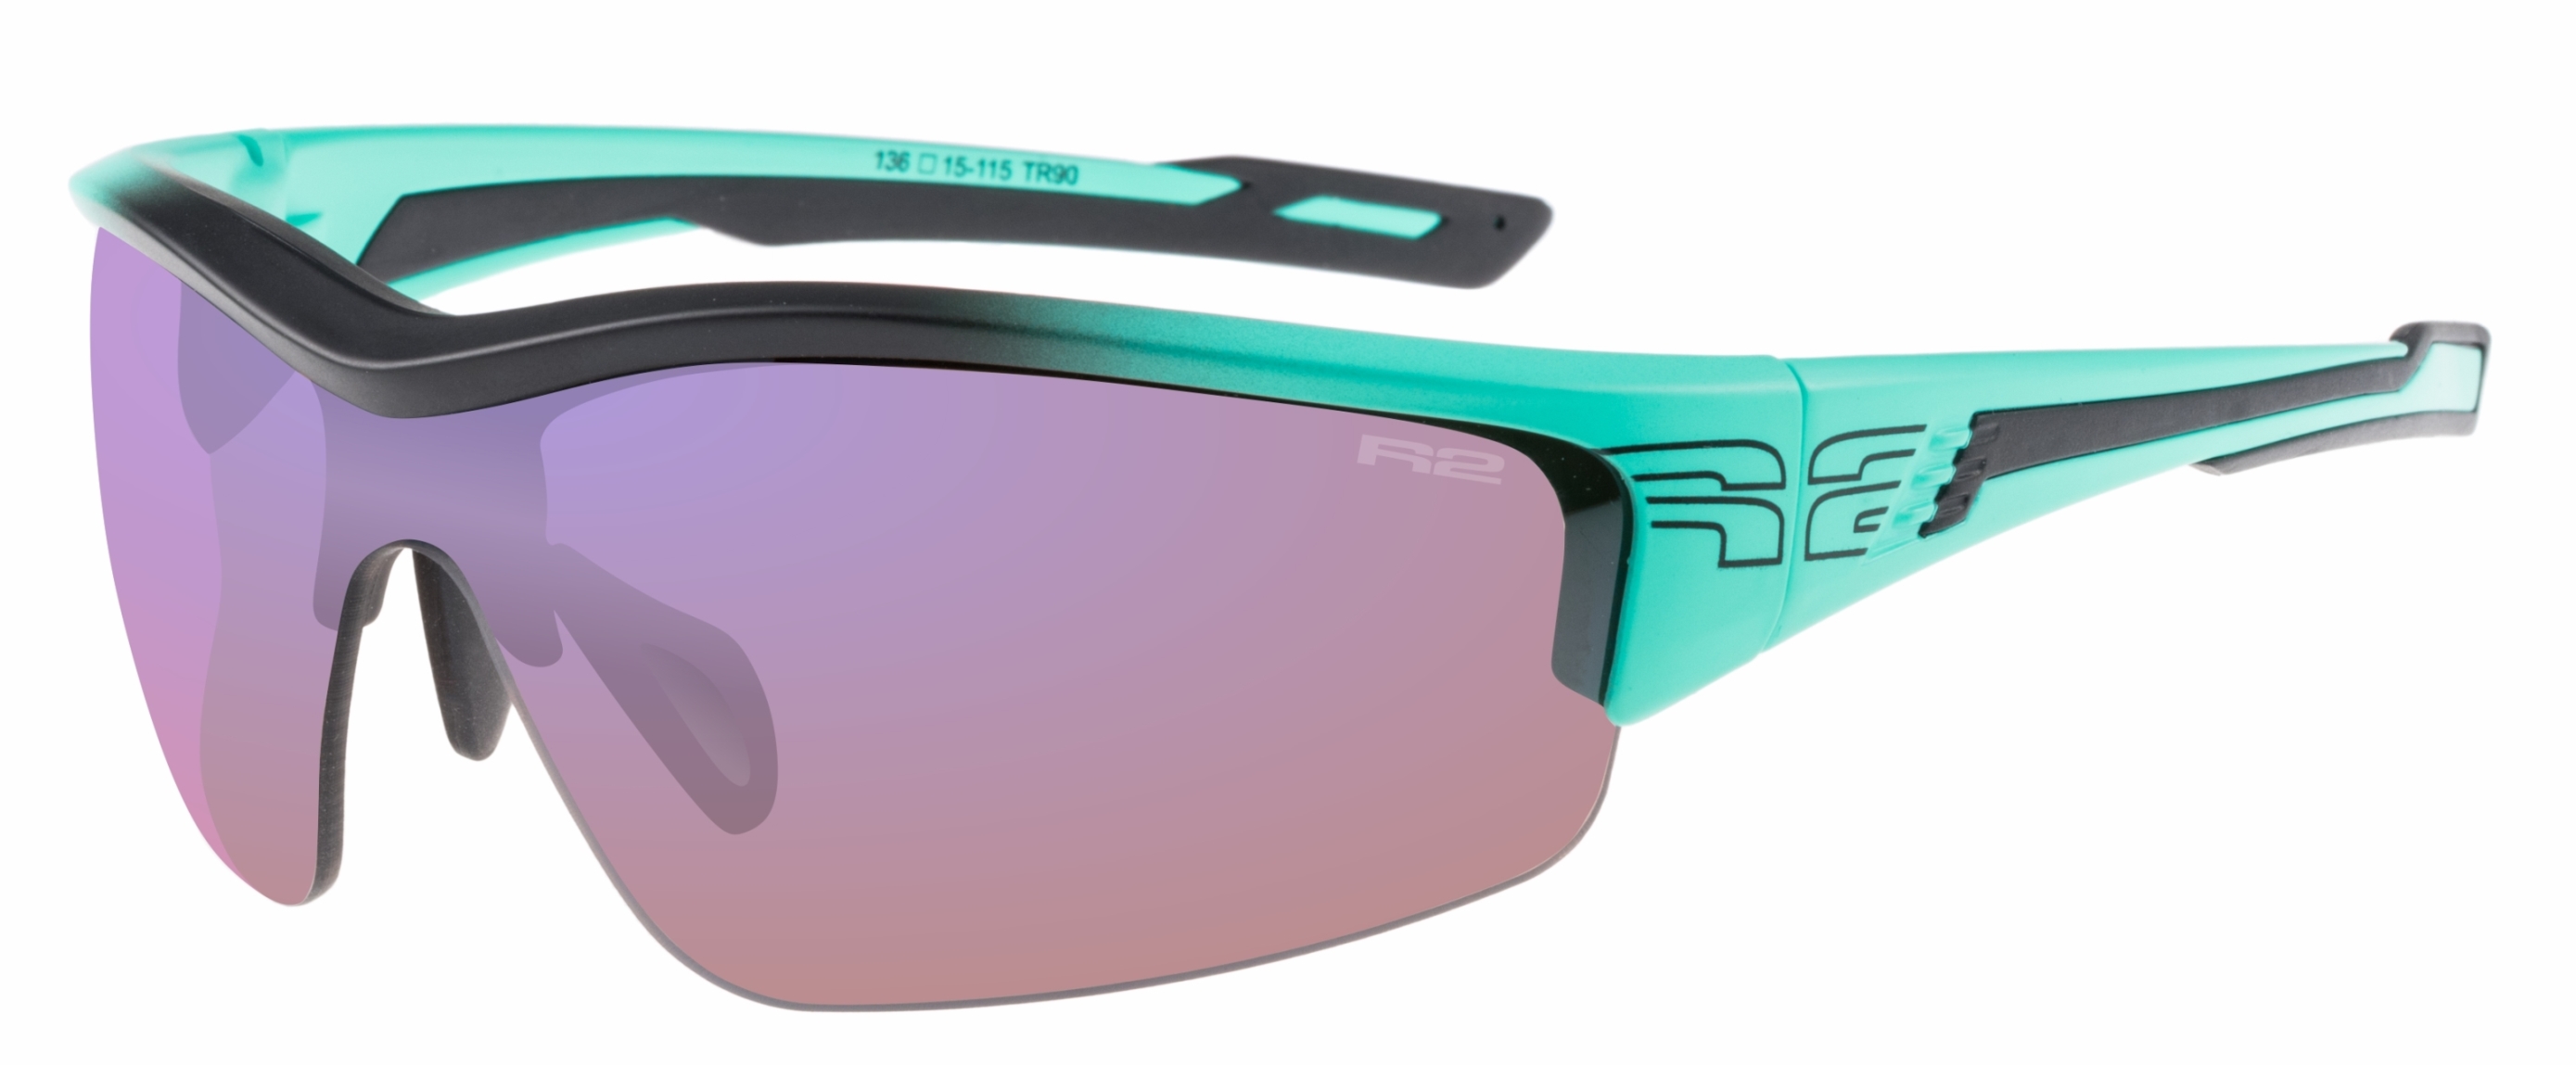 HD sport sunglasses R2 WHEELLER AT038P standard